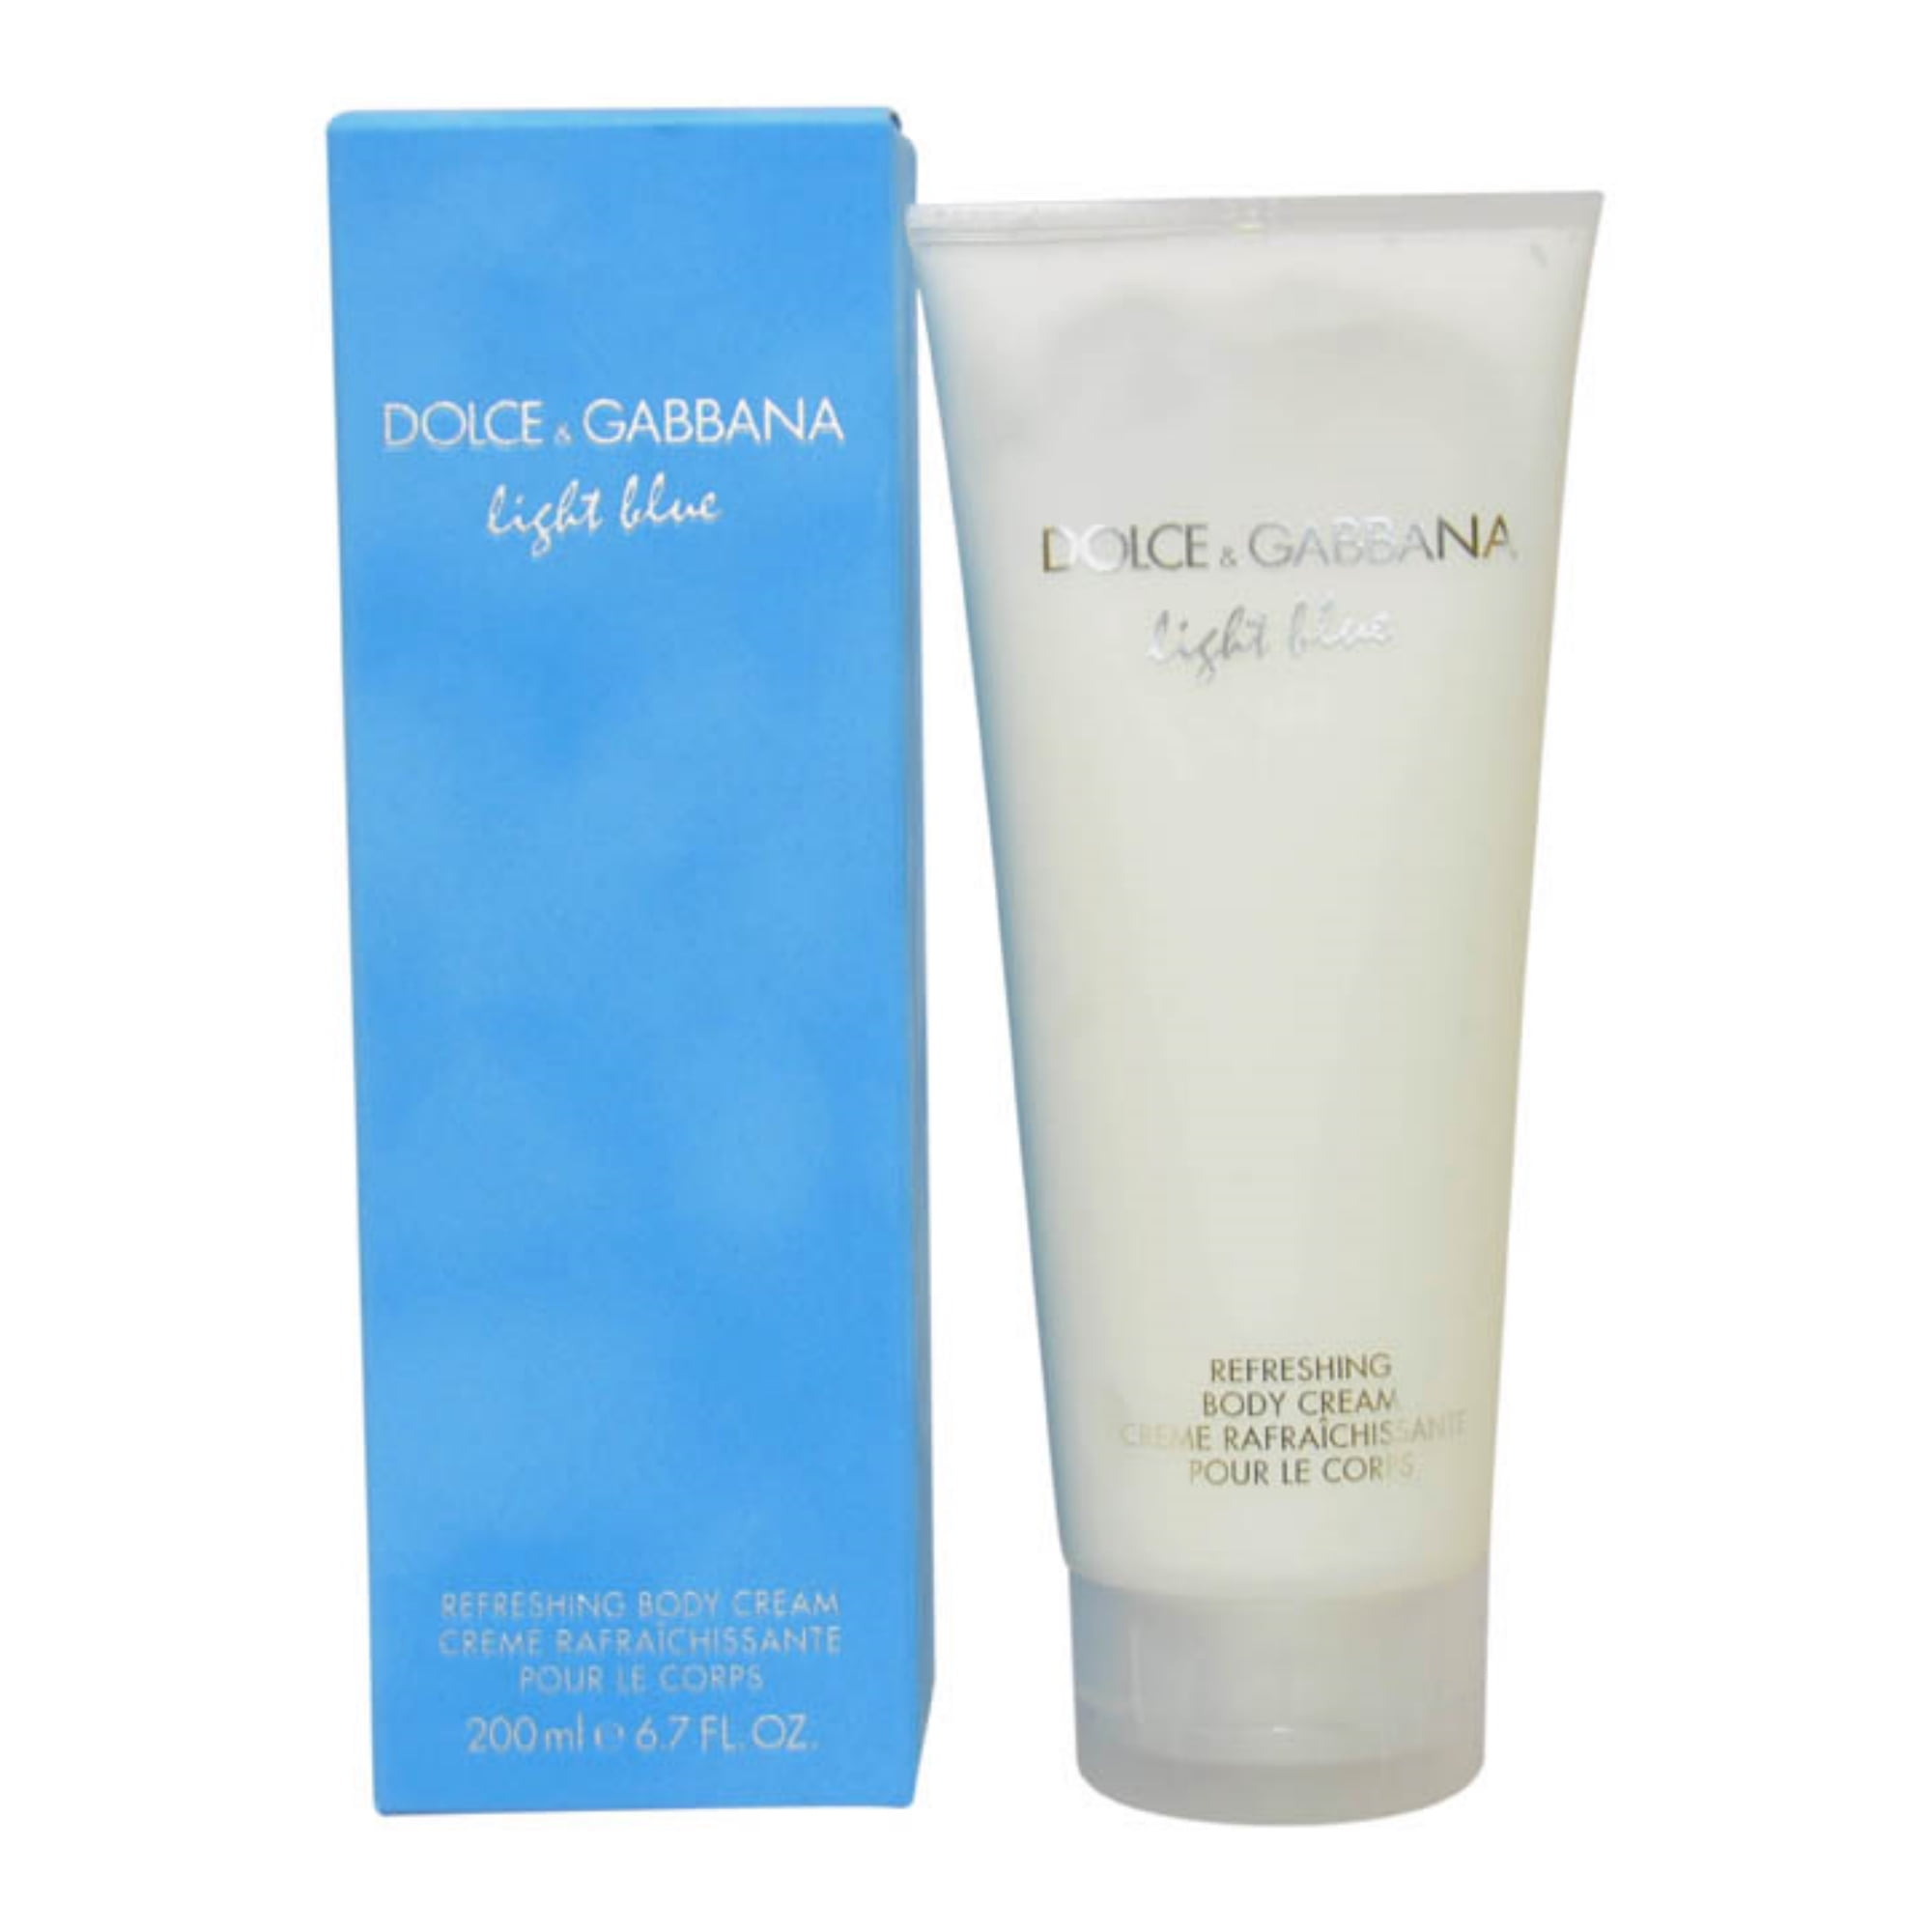 d&g light blue body lotion